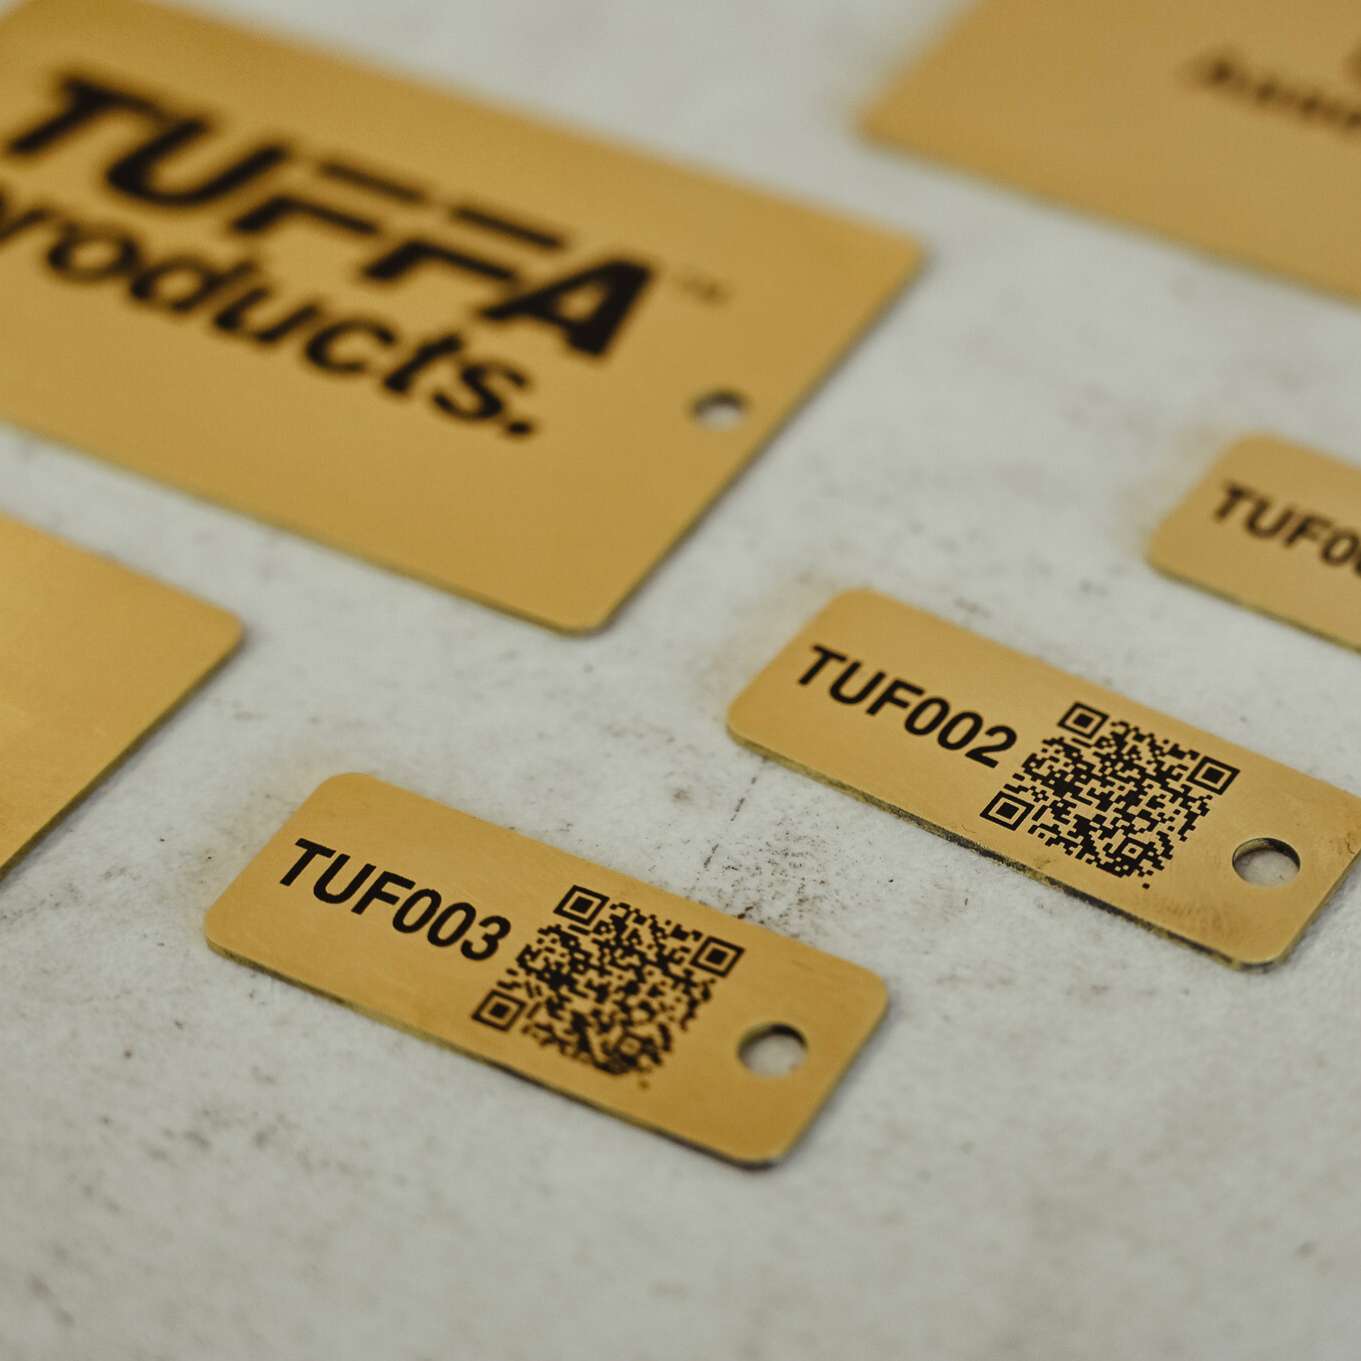 Tuffa Brass Engraved Asset Plates